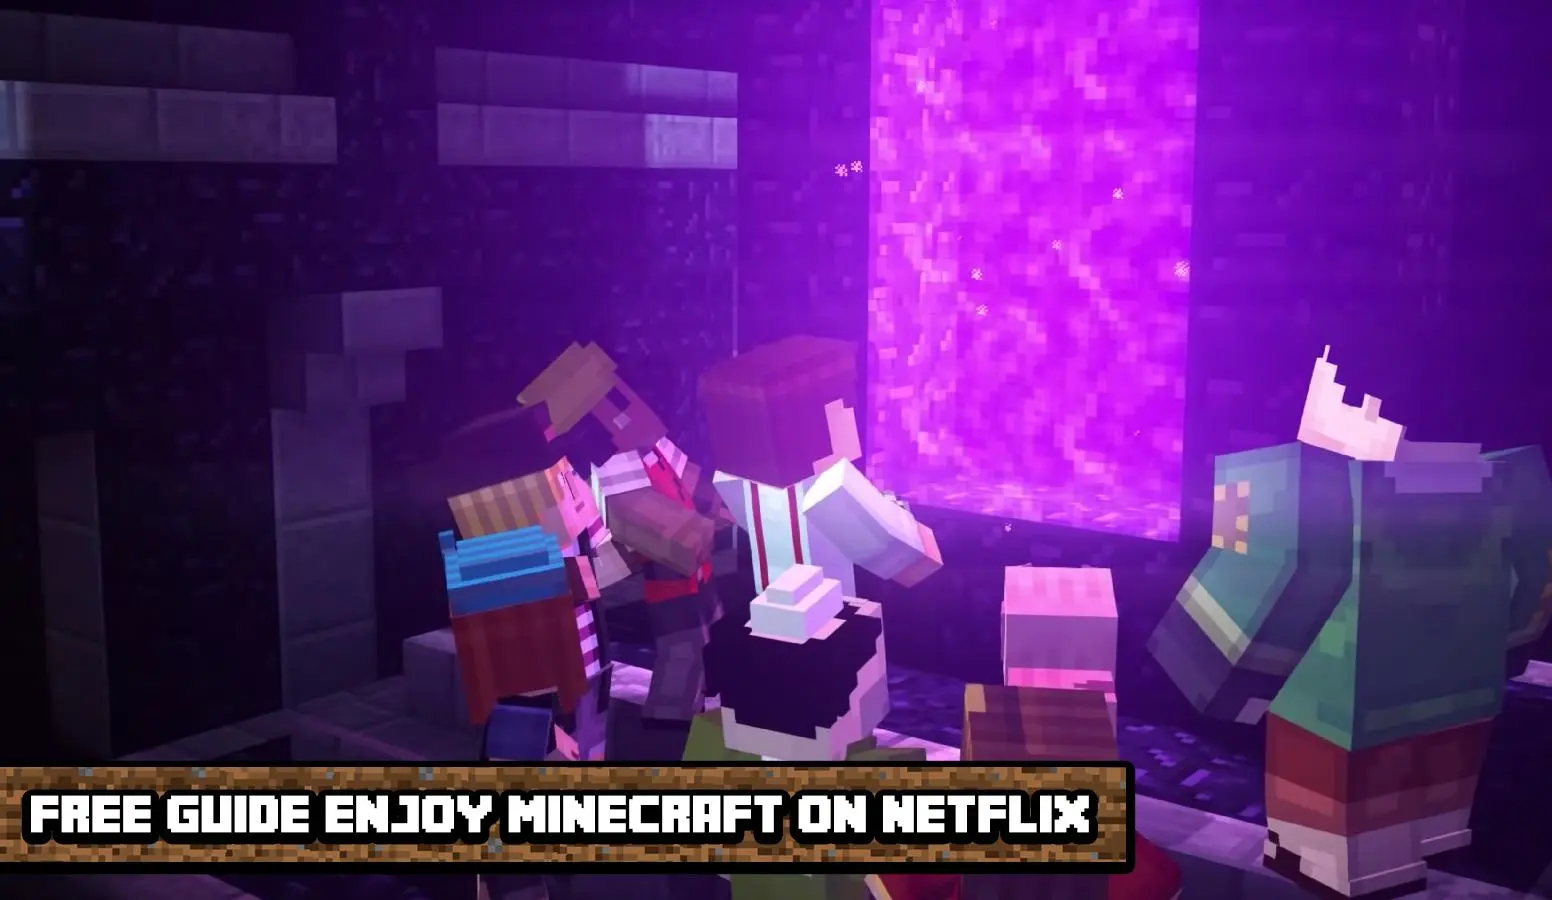 Is Minecraft: Story Mode Netflix good?